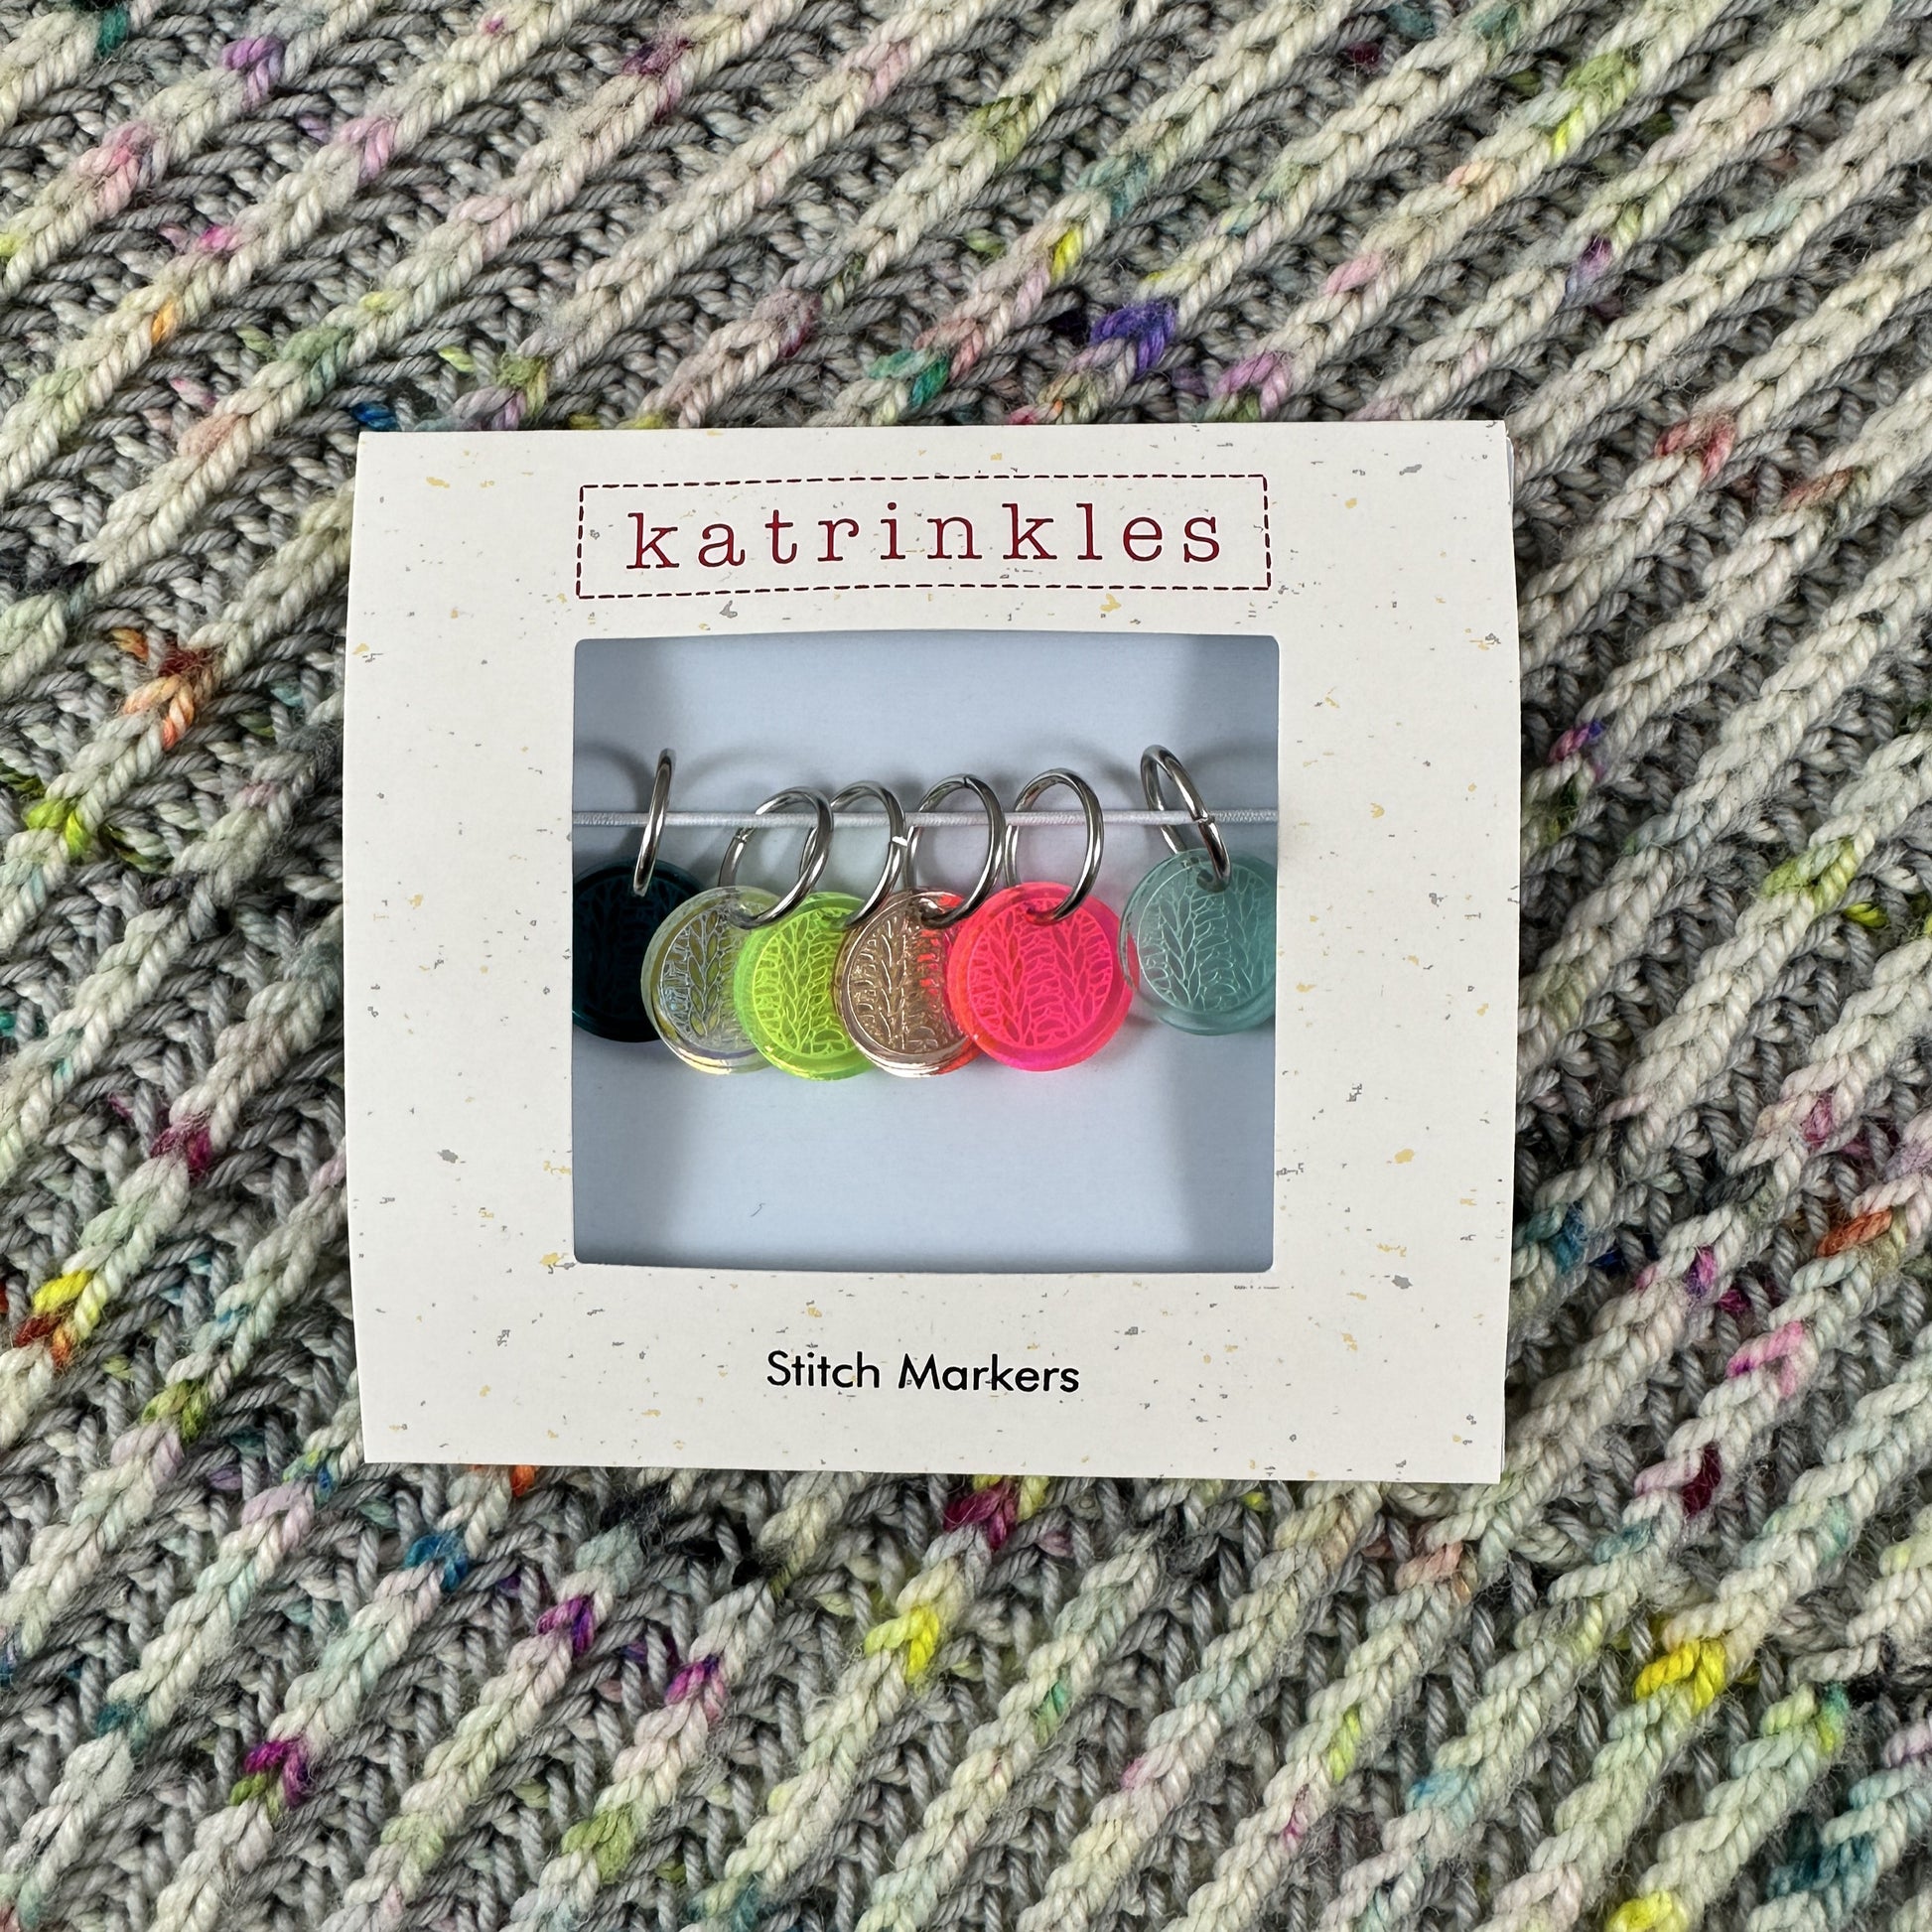 New: 10 PCS Crochet Markers, Premium Knitting Stitch Markers, Mix Colors